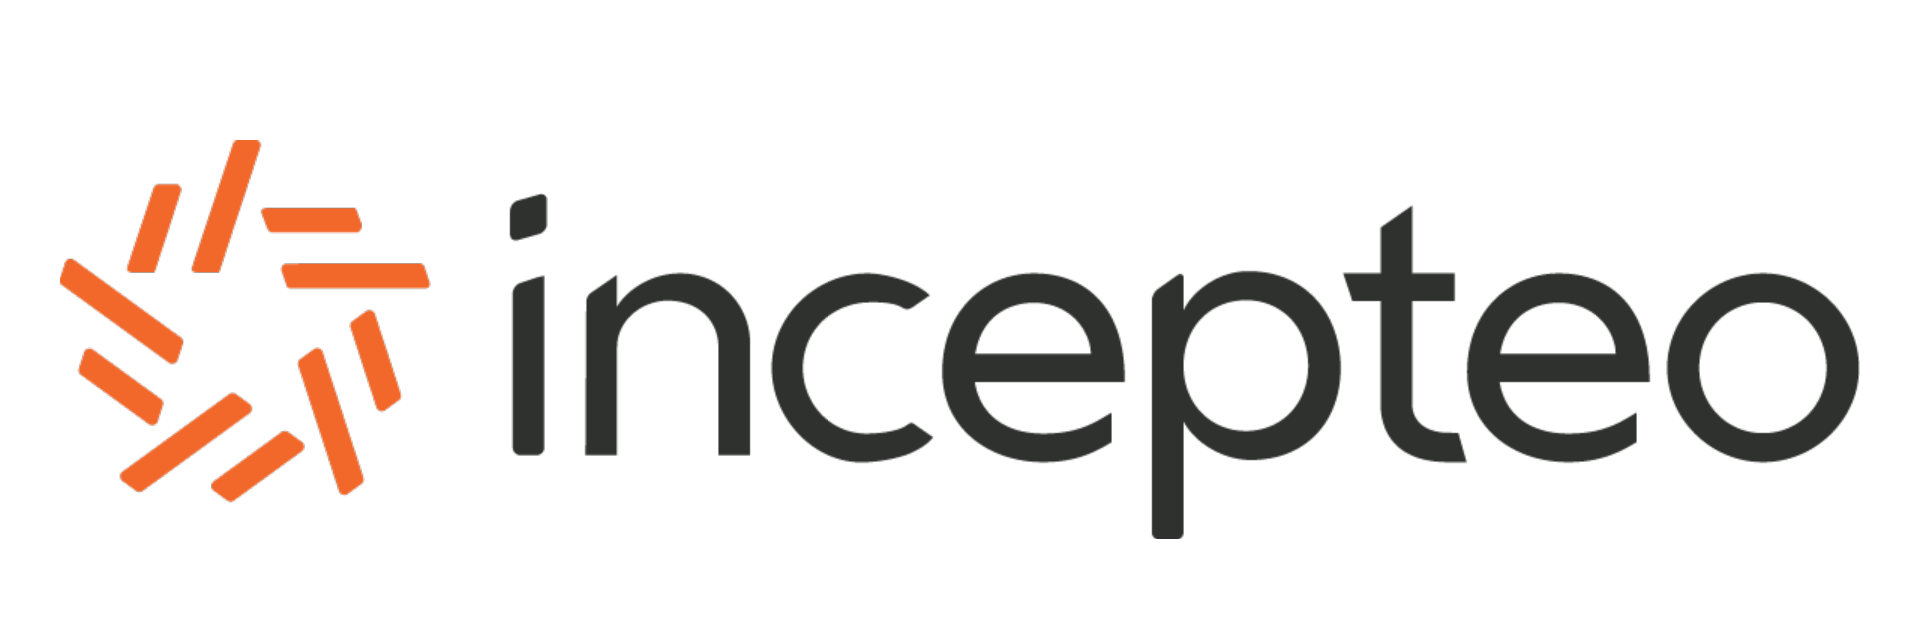 Incepteo Ltd